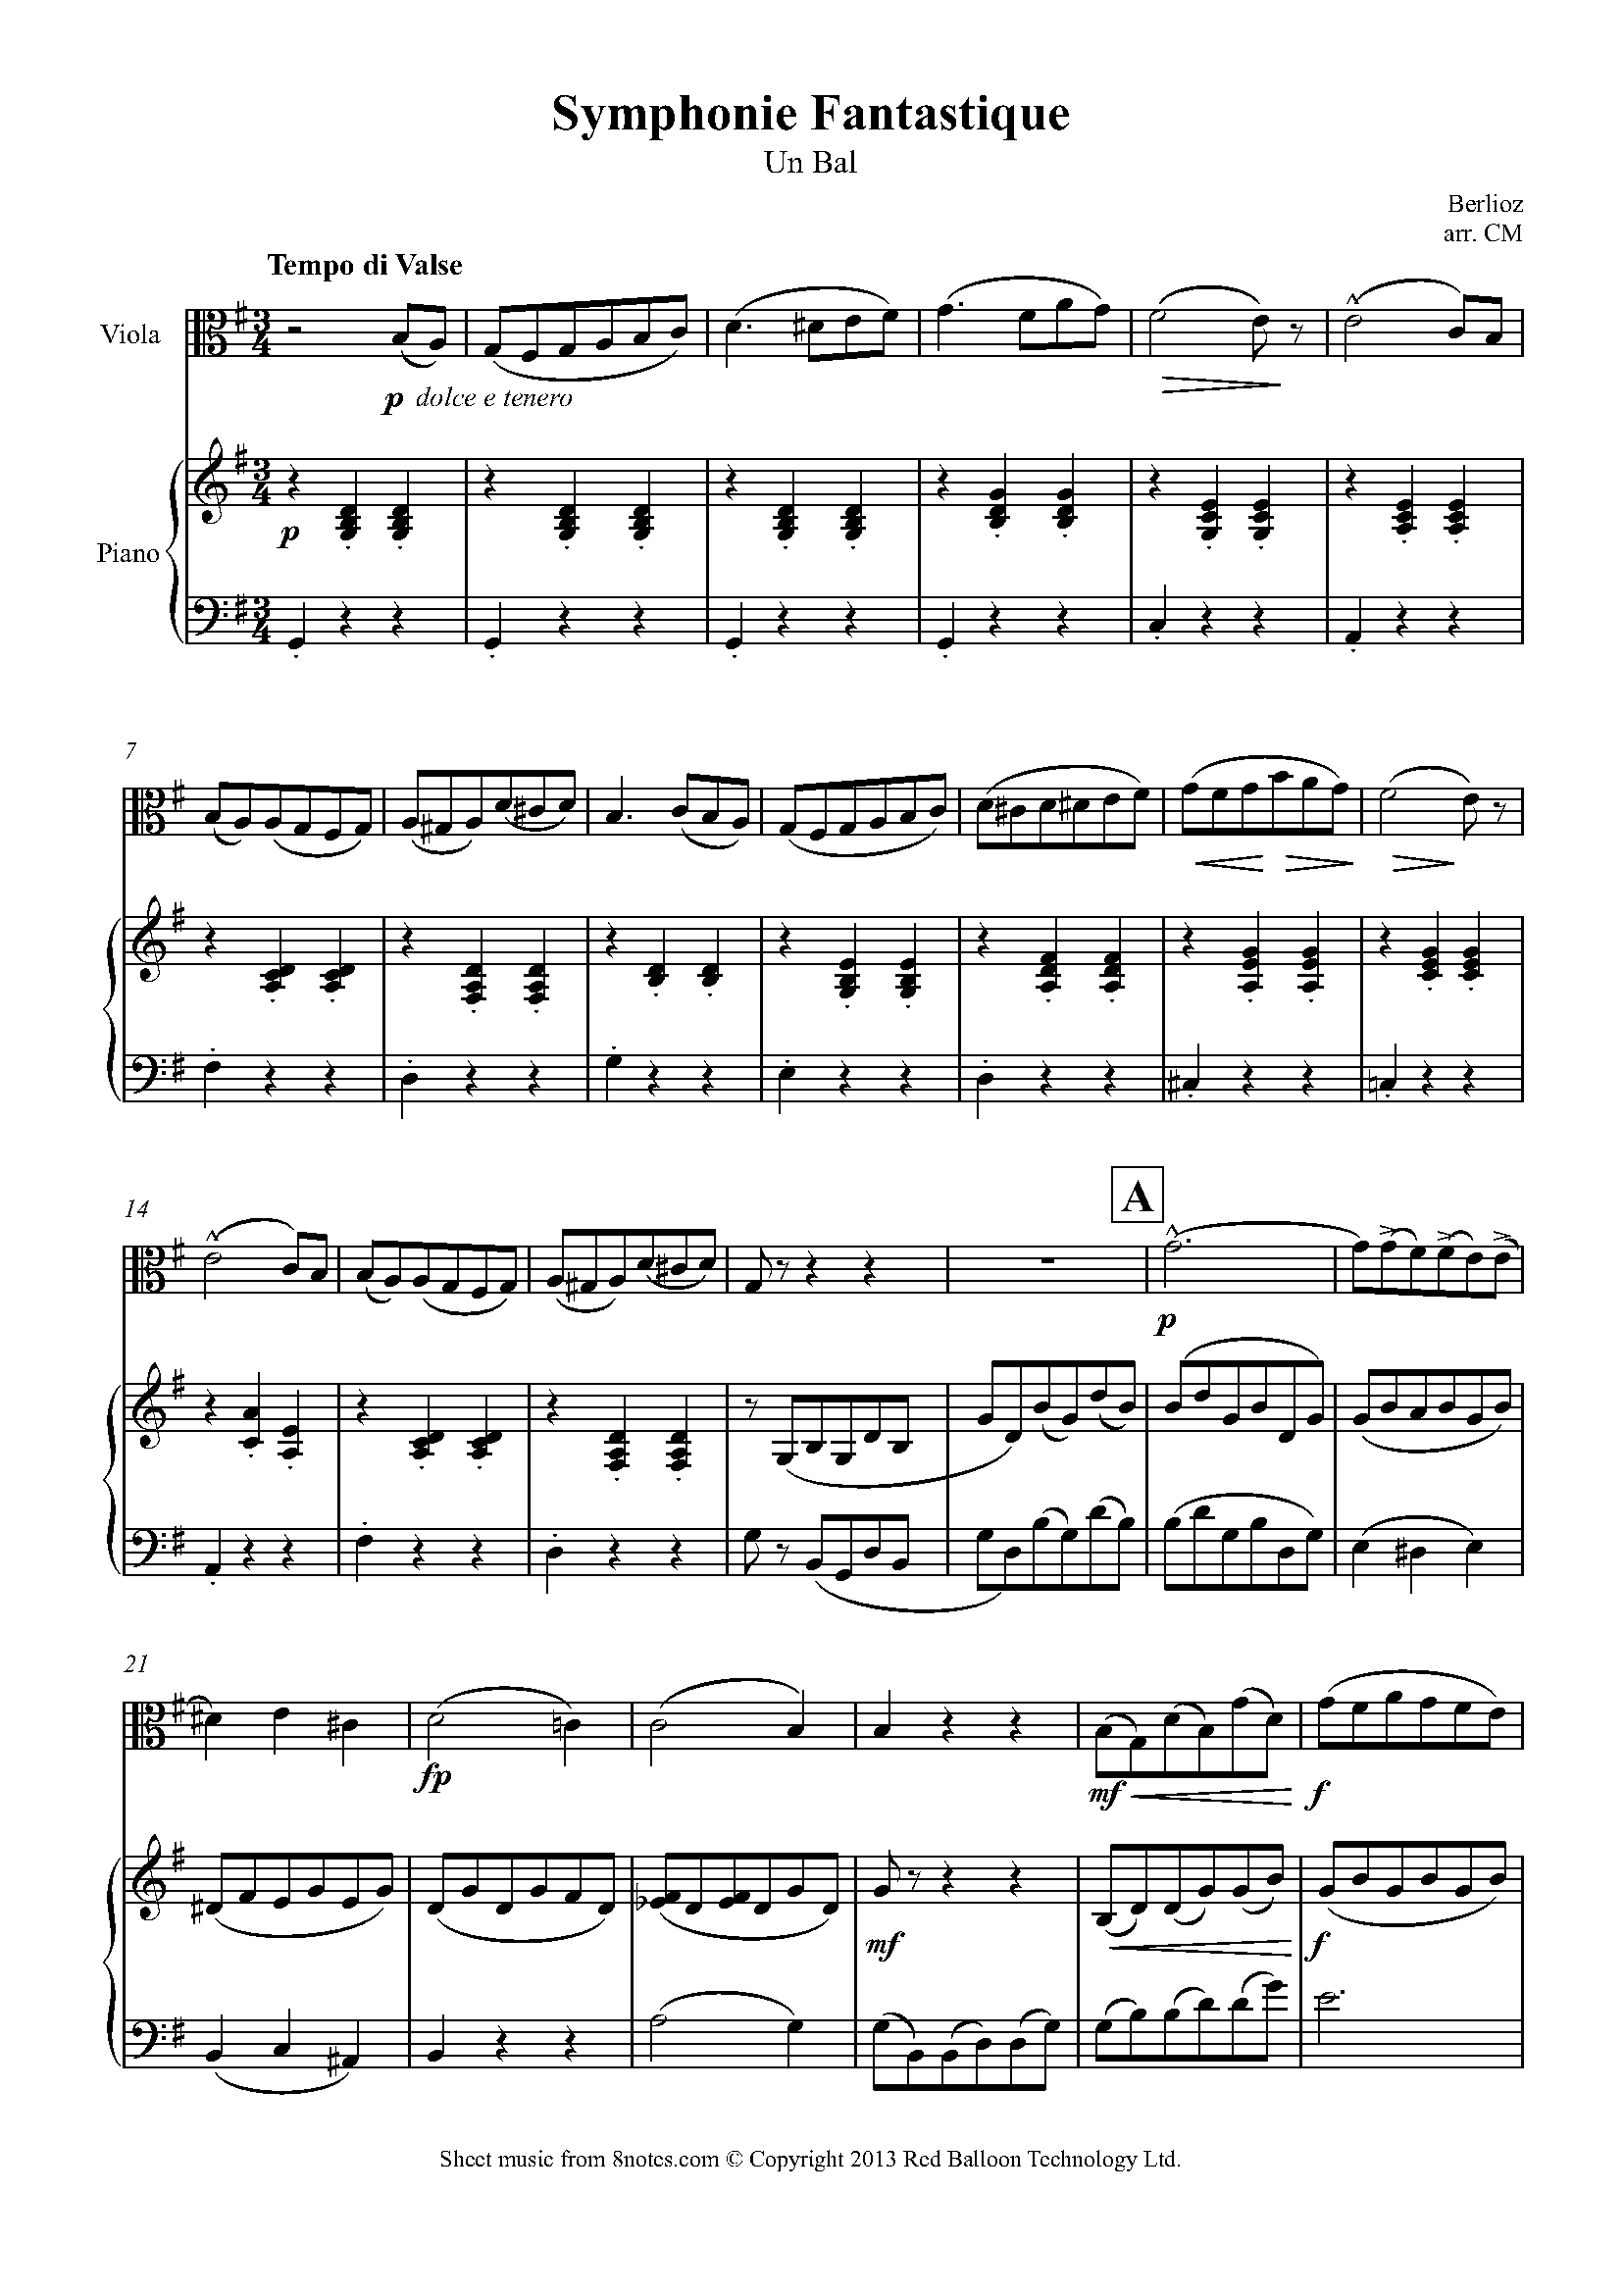 Berlioz - Symphonie Fantastique - Un Bal Sheet music for Viola - 8notes.com